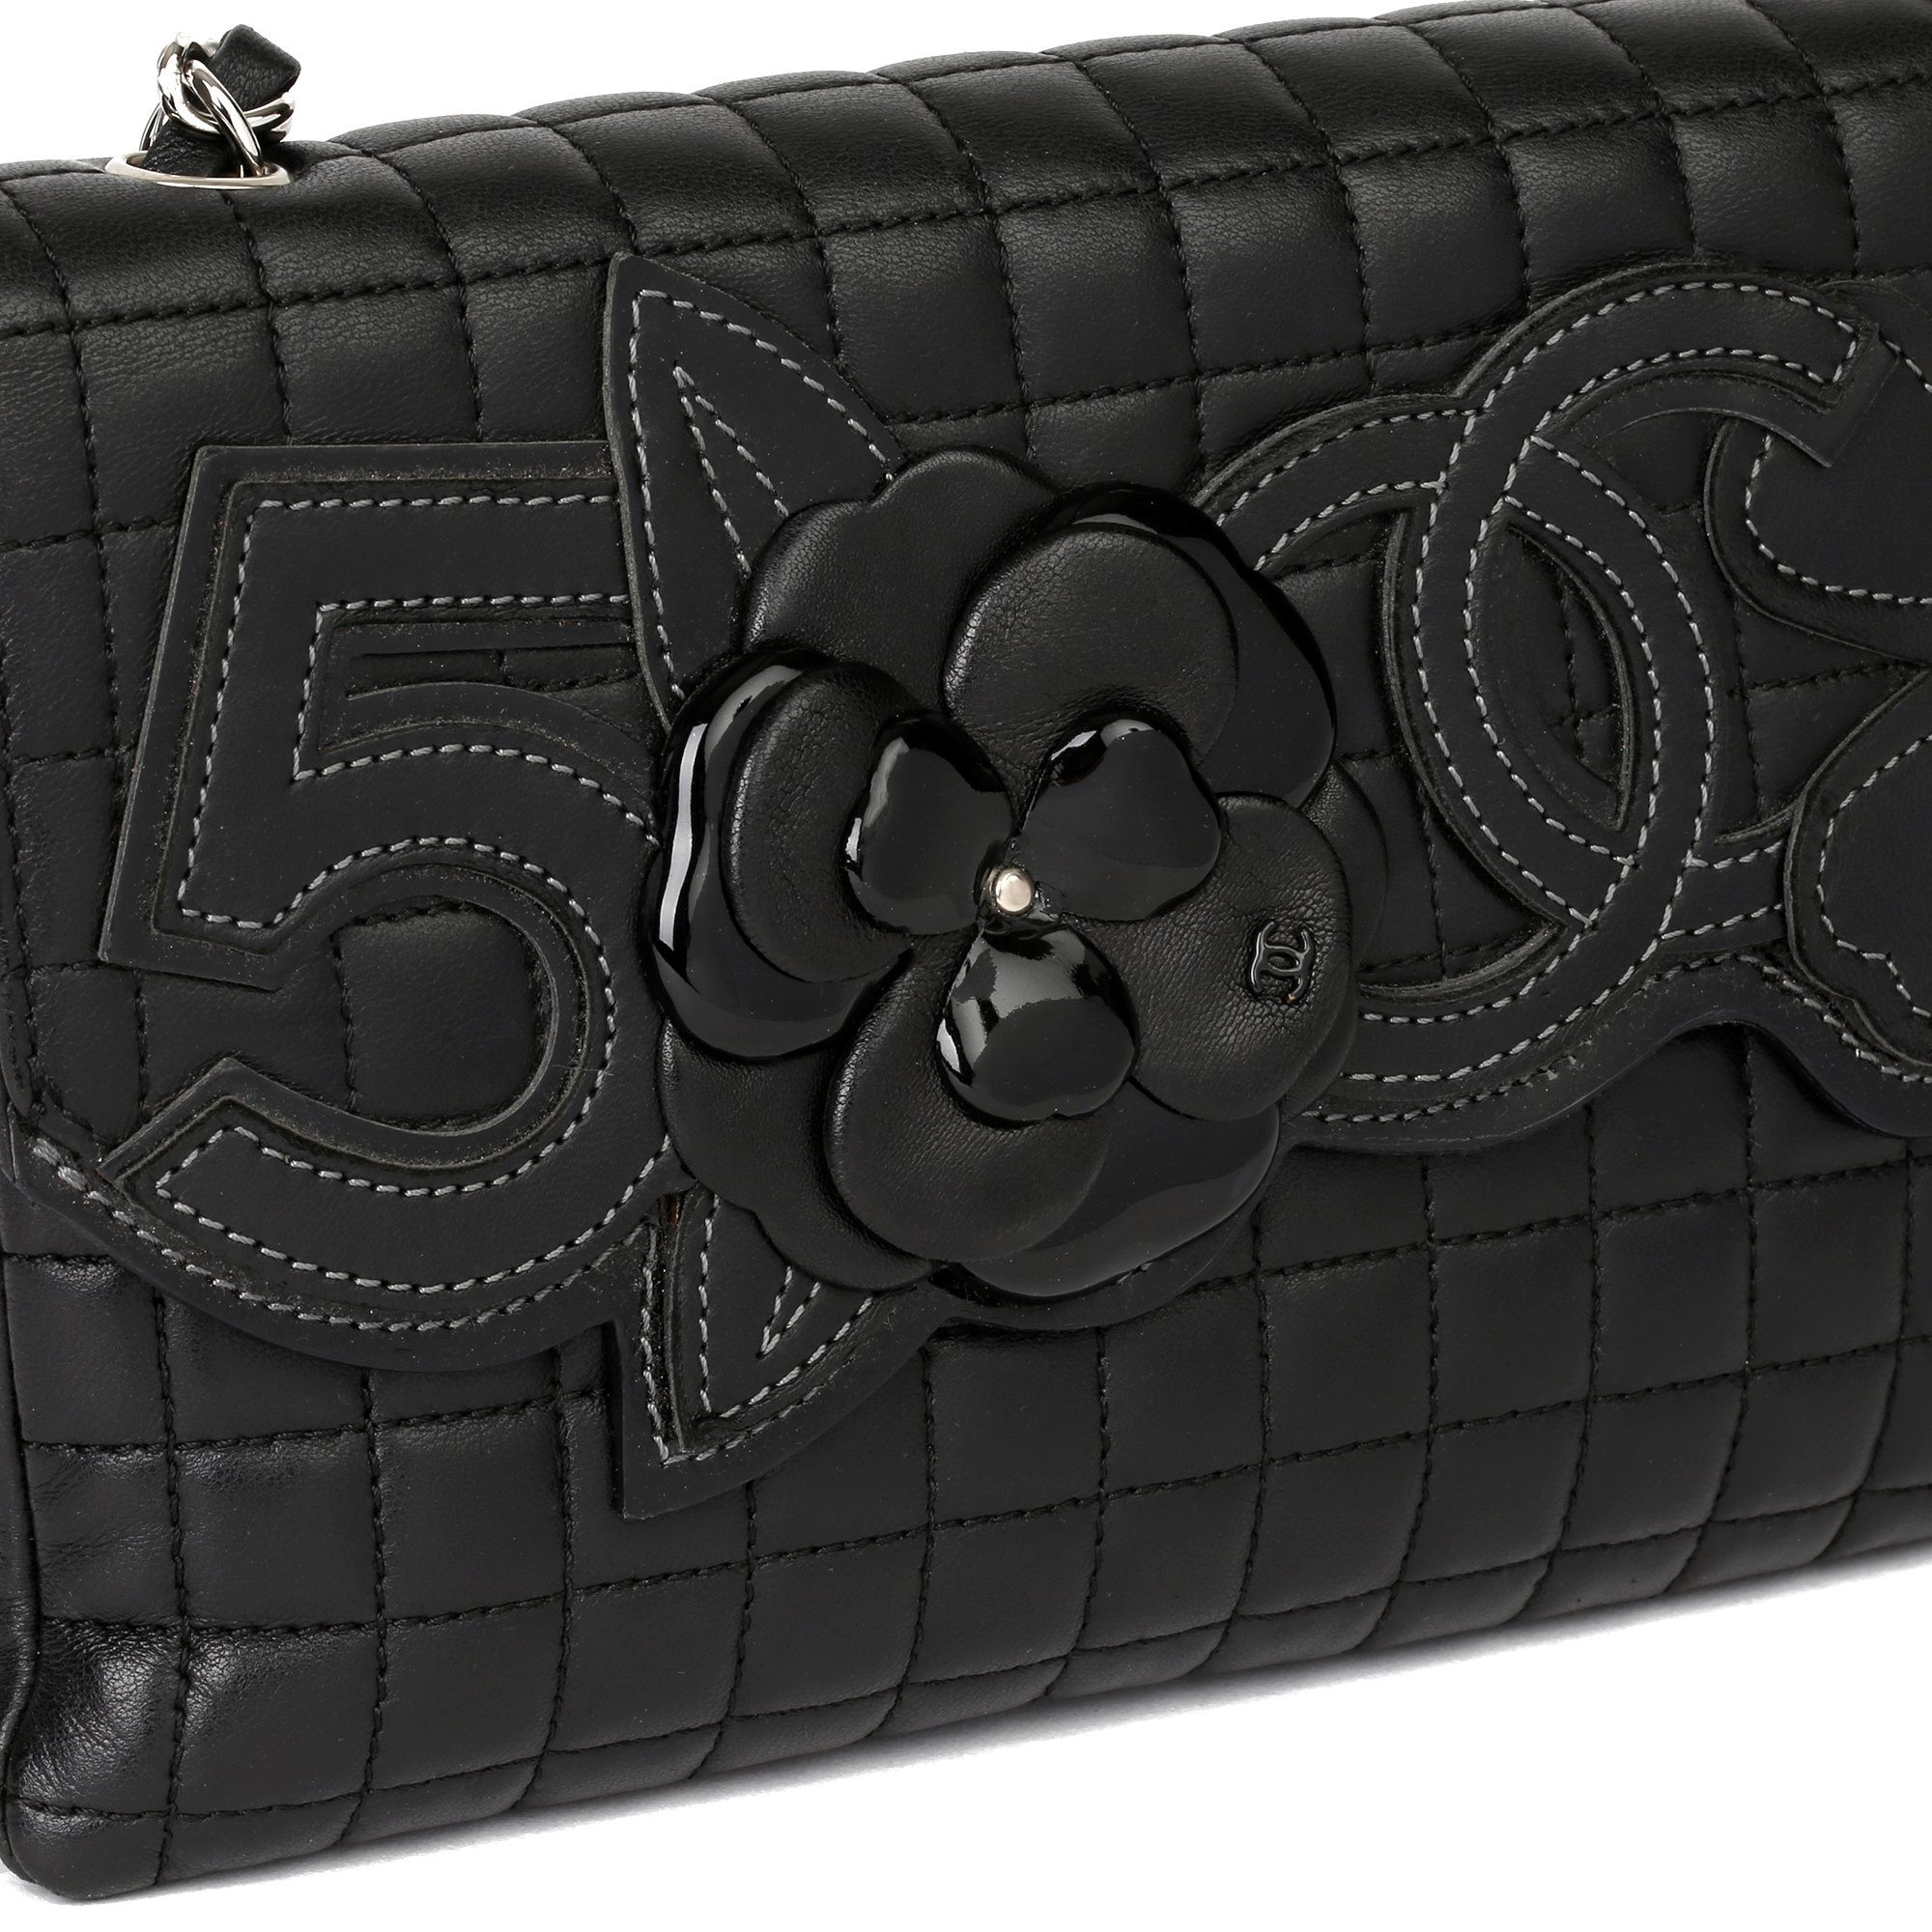 Chanel No. 5 Camellia Flap Bag 2005 CB276 | Second Hand Handbags